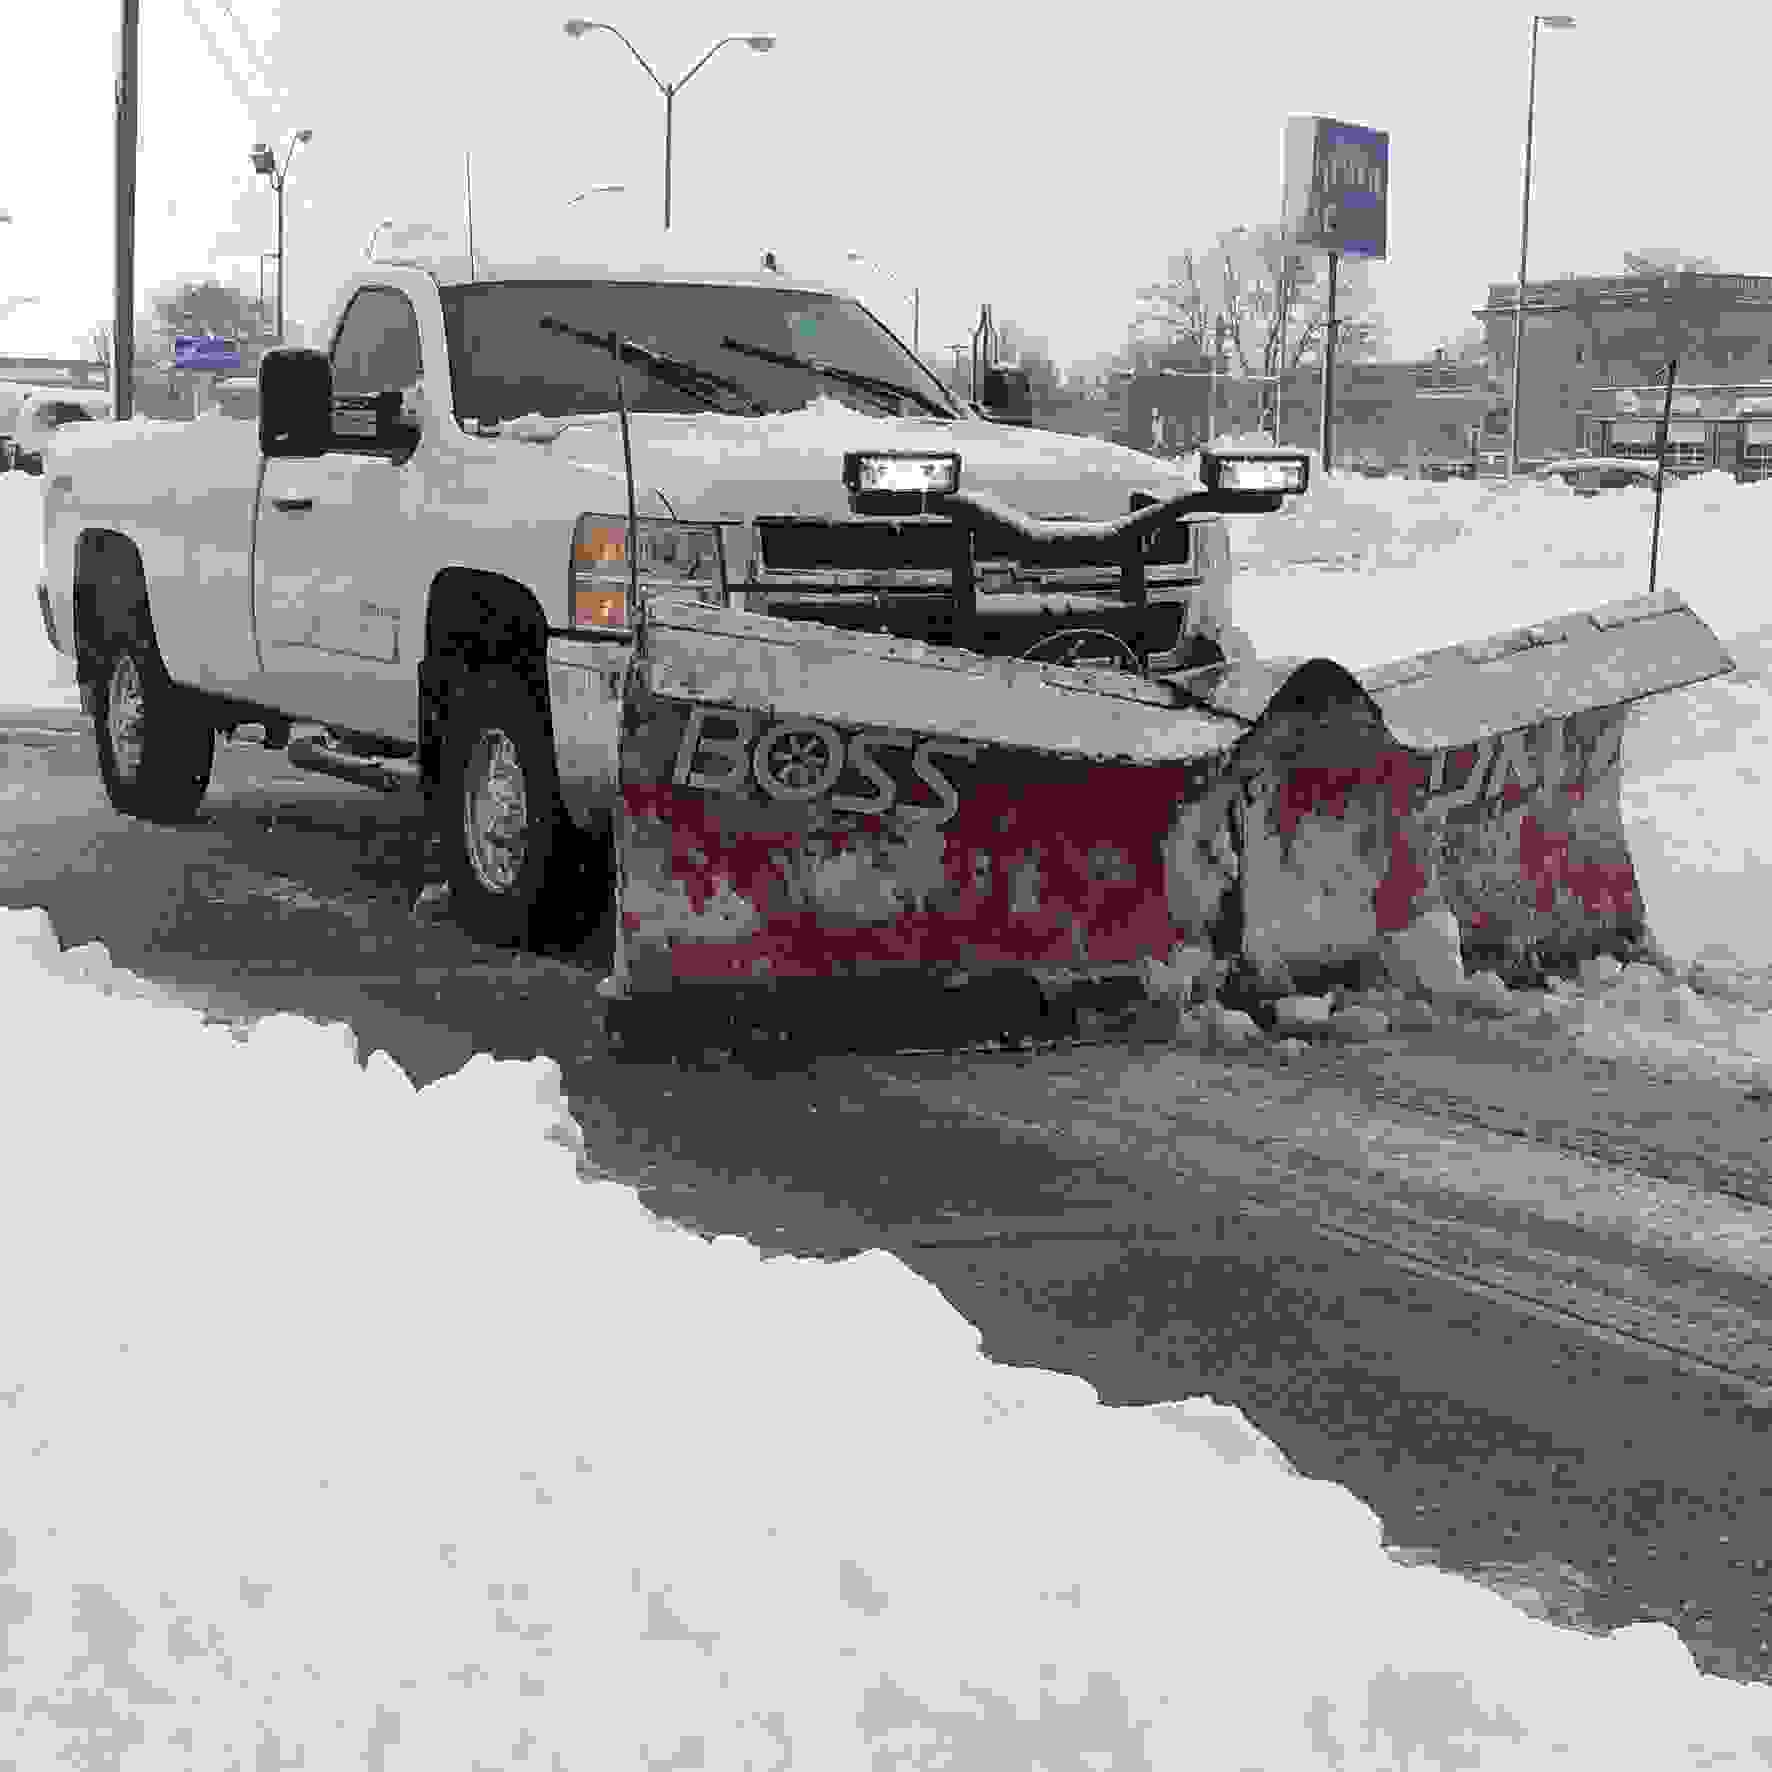 Plow truck plowing snow